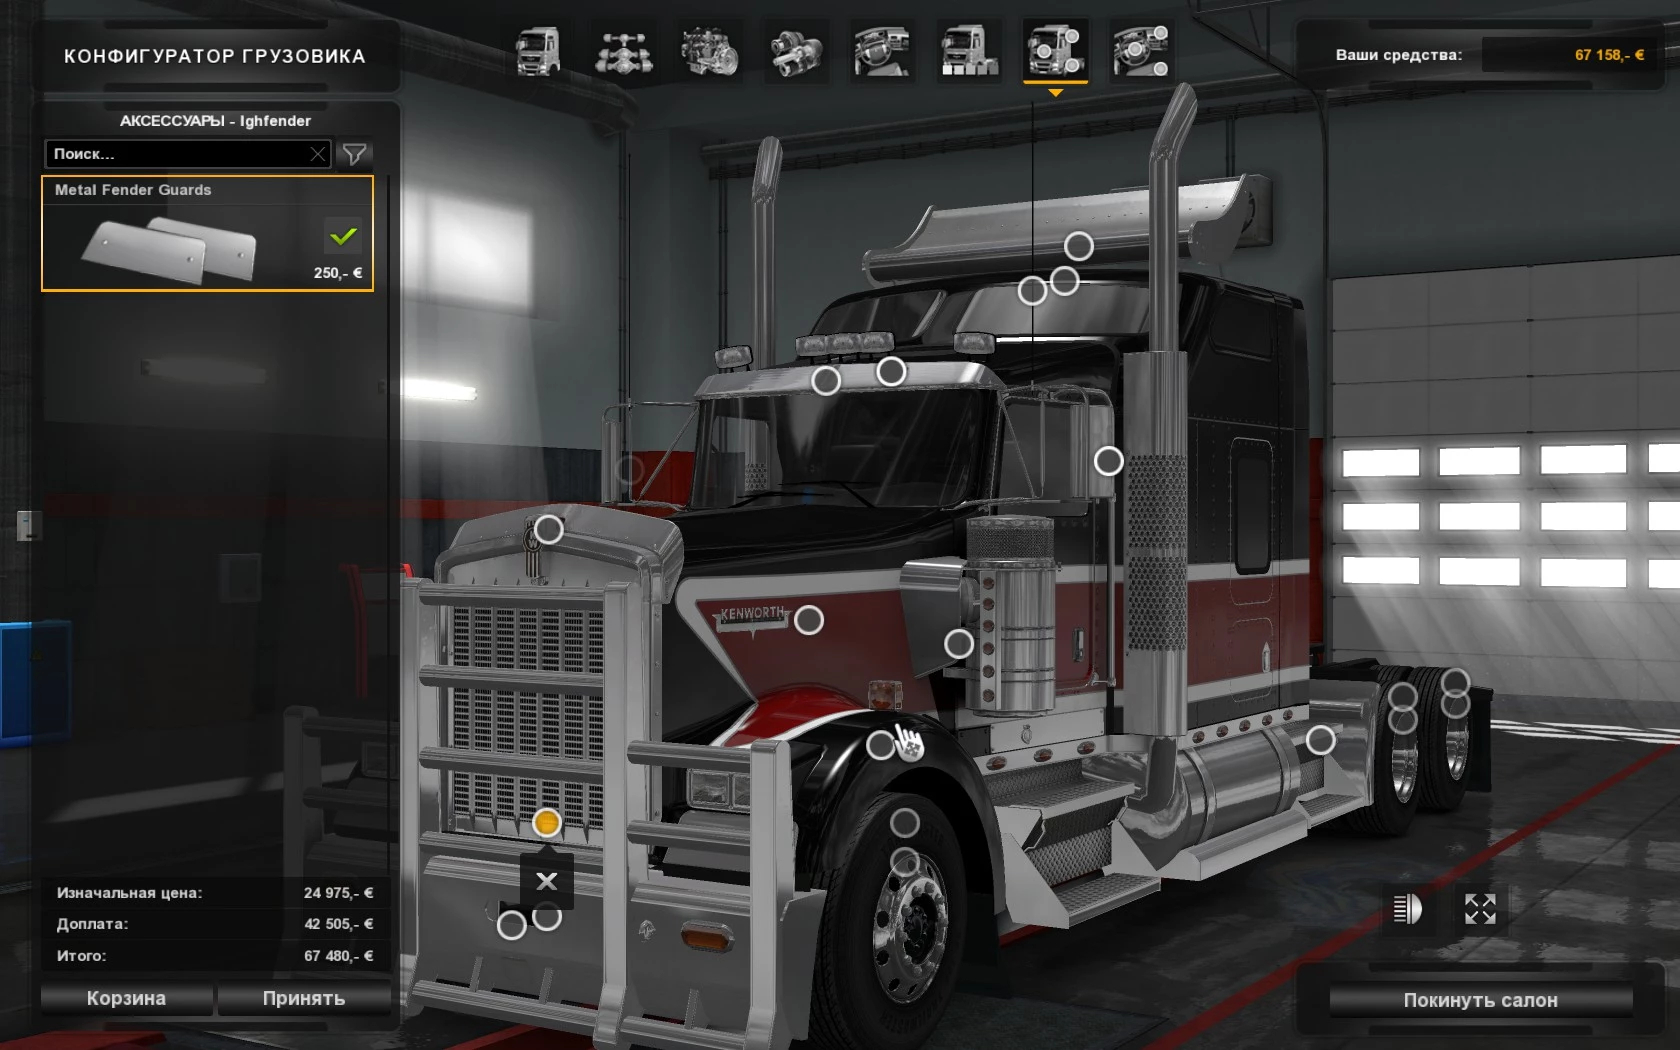 Euro truck simulator моды грузовиков. Грузовики для етс 2. АТС 2 Грузовики. Euro Truck Simulator 2 моды грузовиков. Euro Truck Simulator 2 версия 1.39.